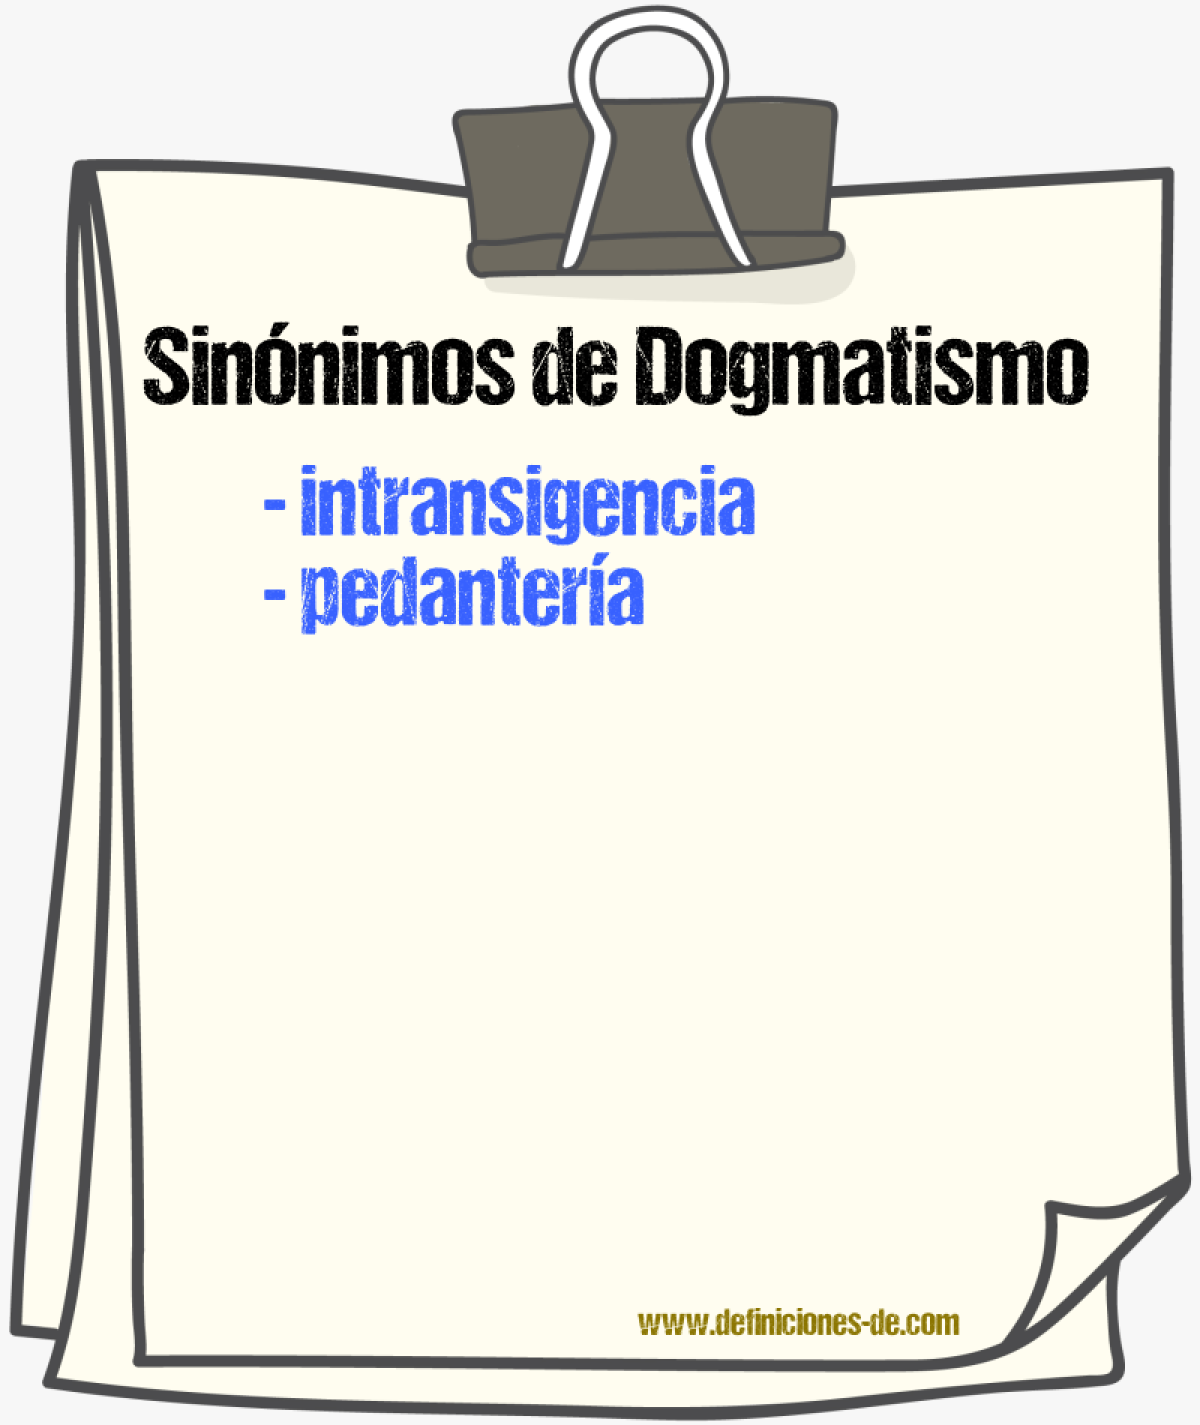 Sinónimos de dogmatismo